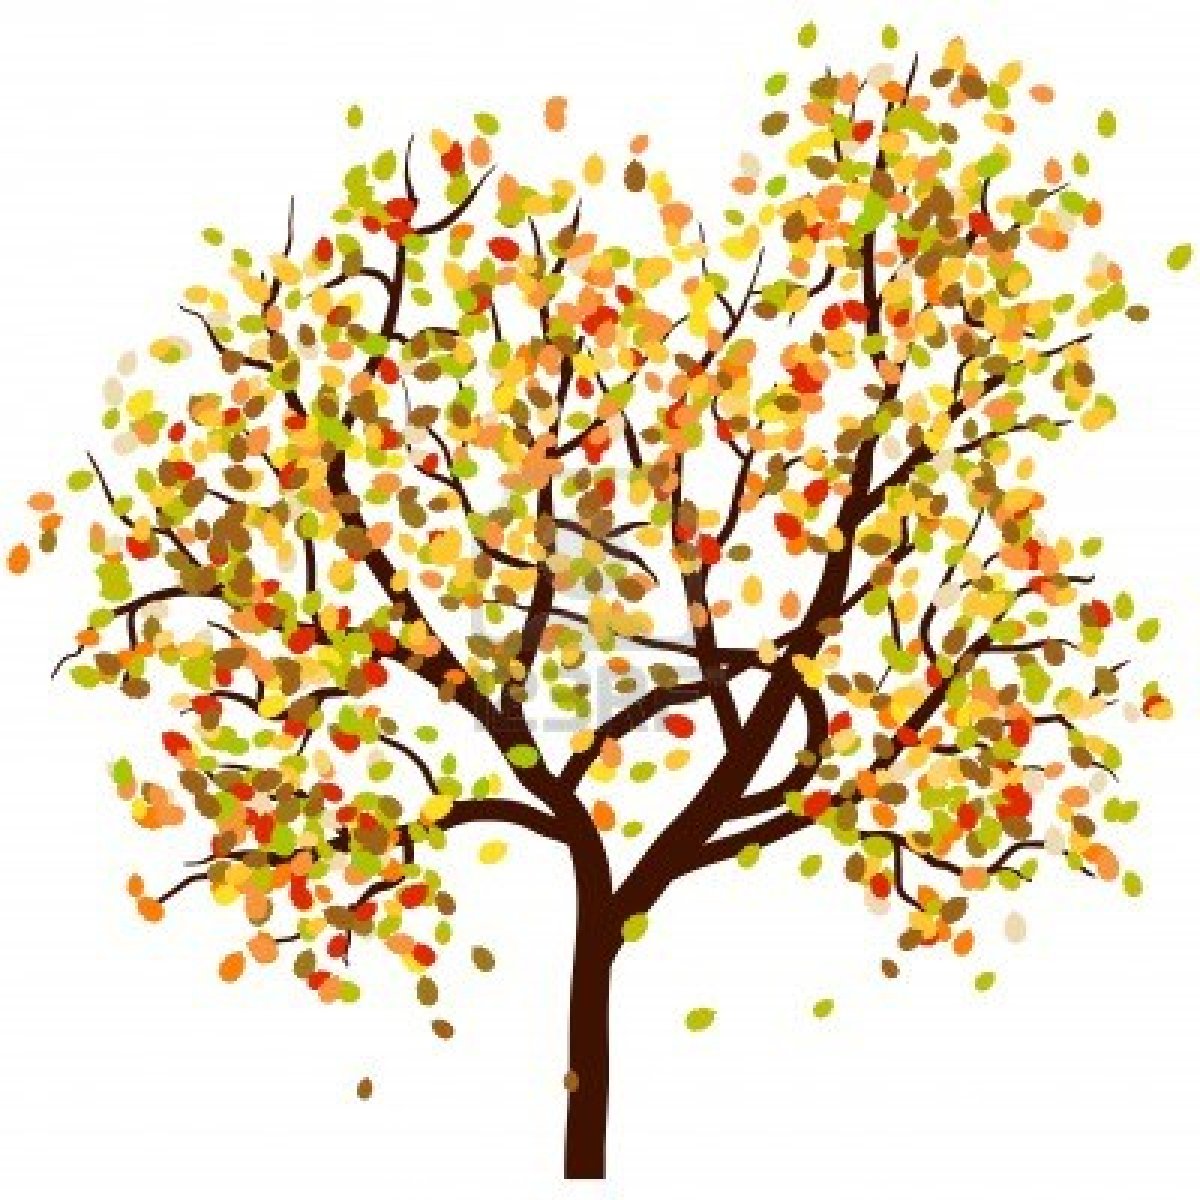 fall clipart autumn tree